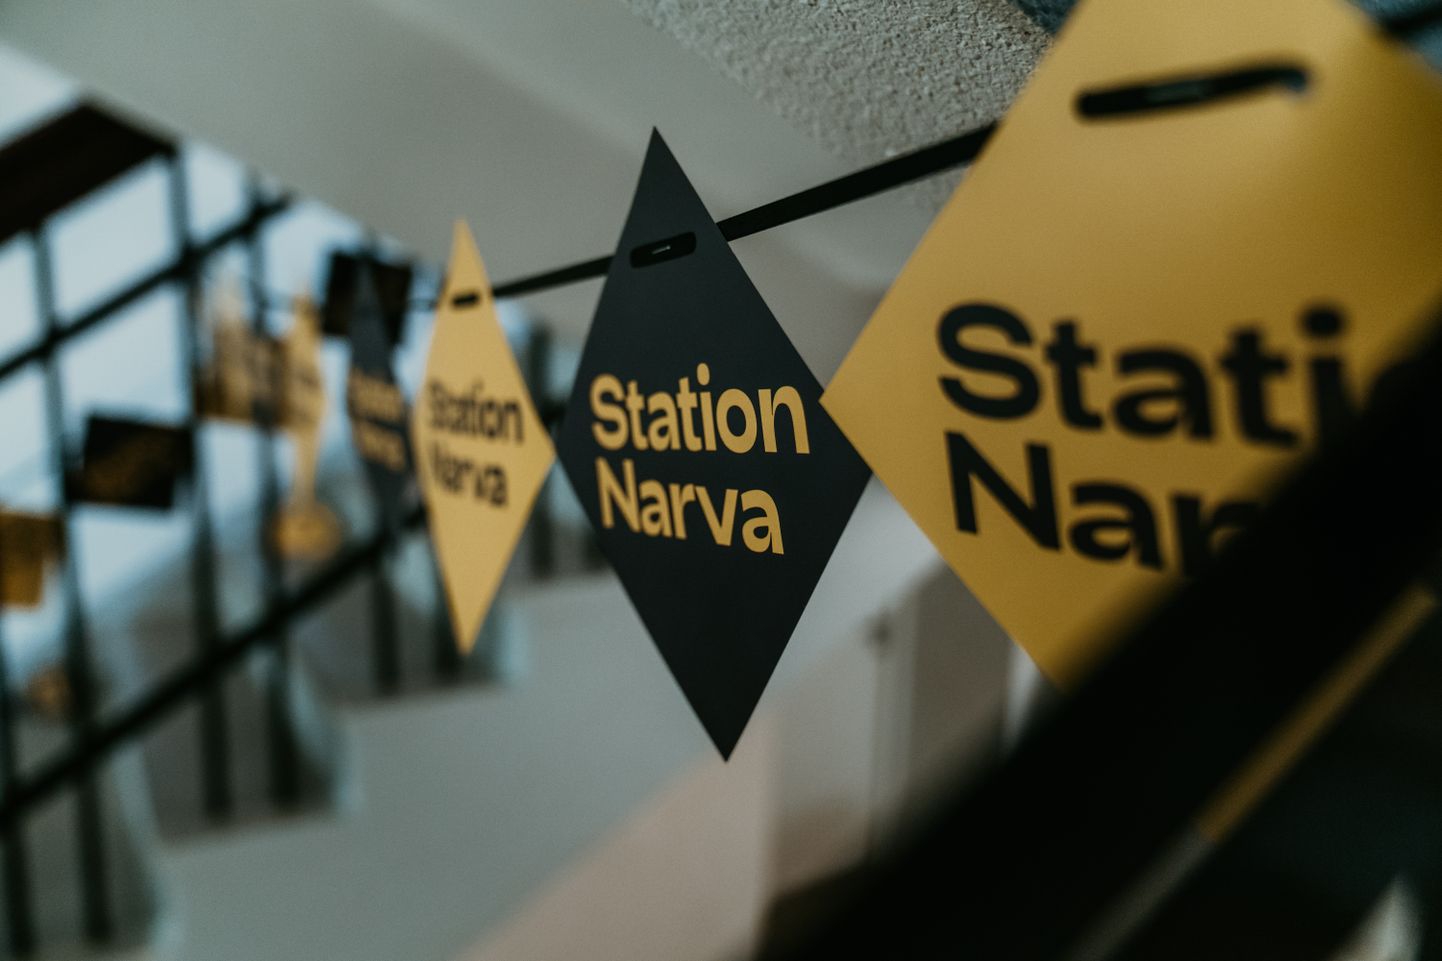 Station Narva